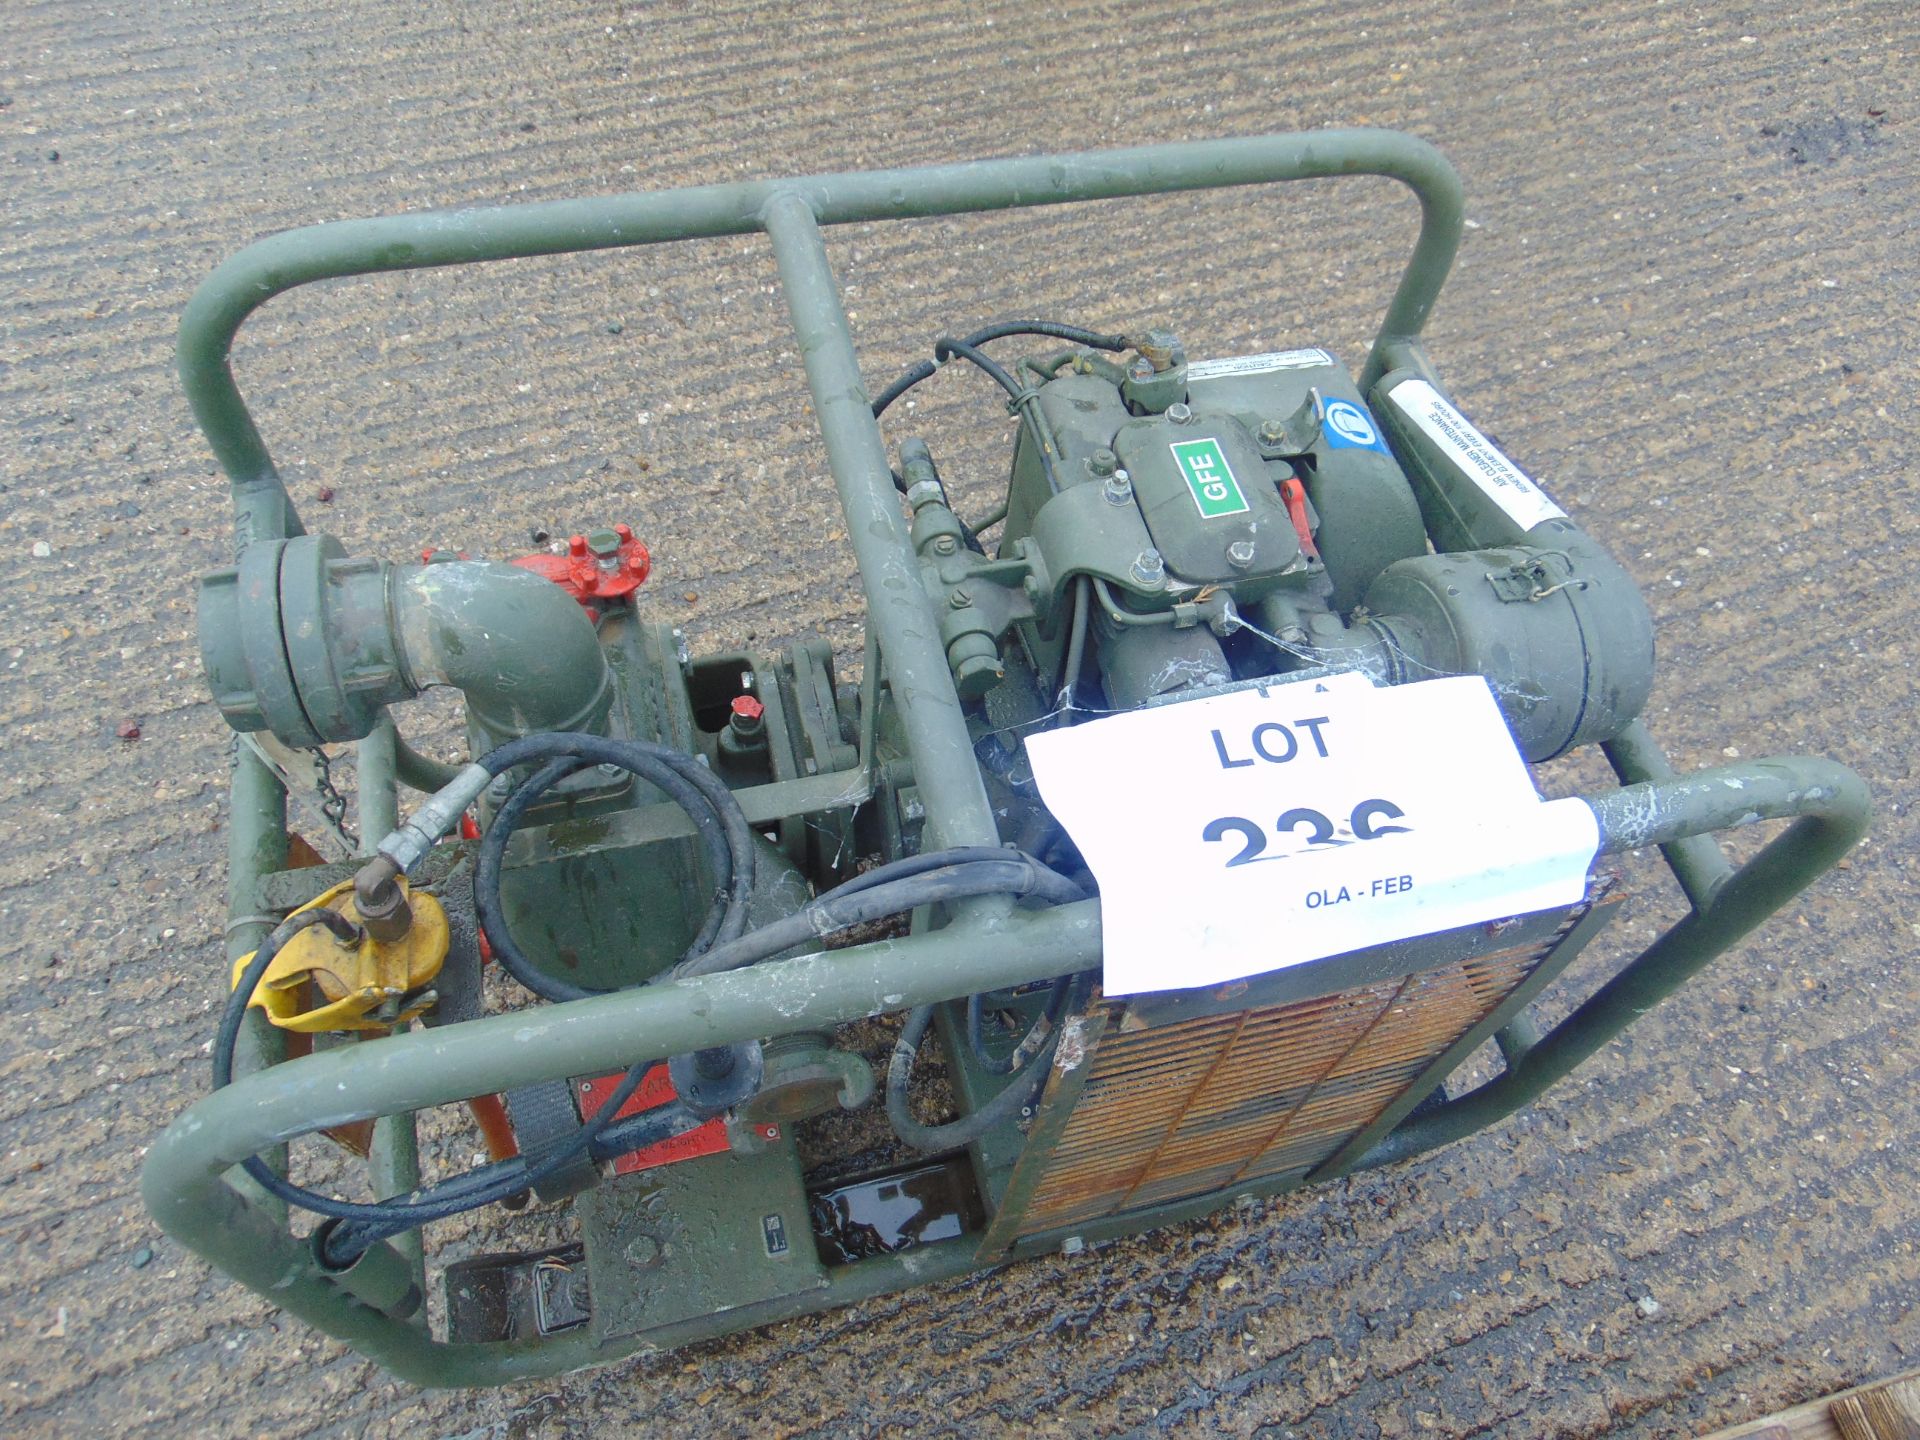 Lister Gilks Diesel water Pump from MoD, as shown